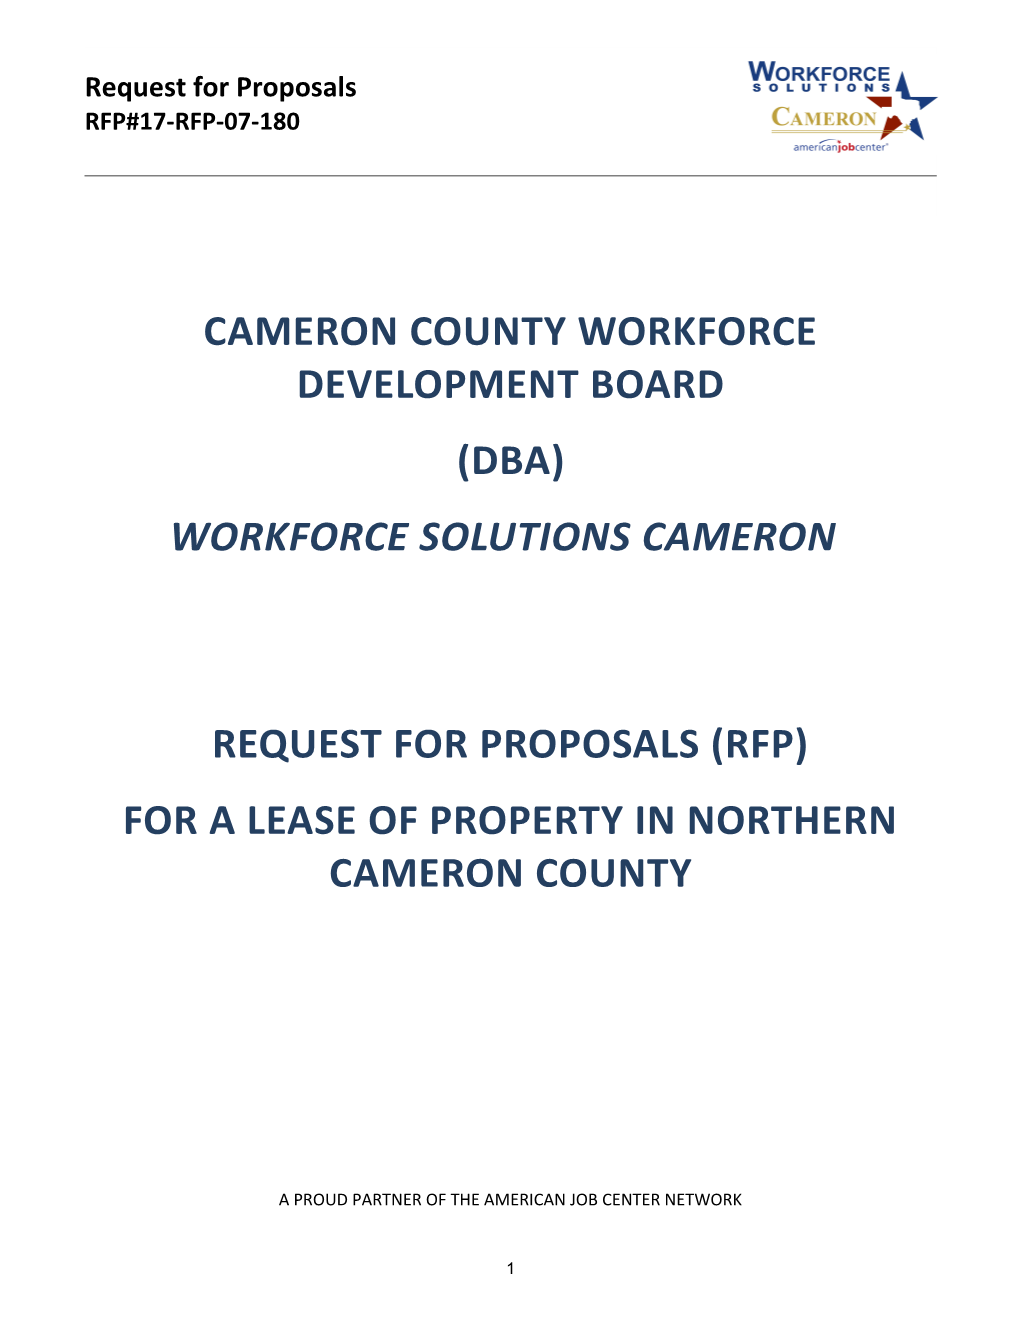 Cameron County Workforce Development Board